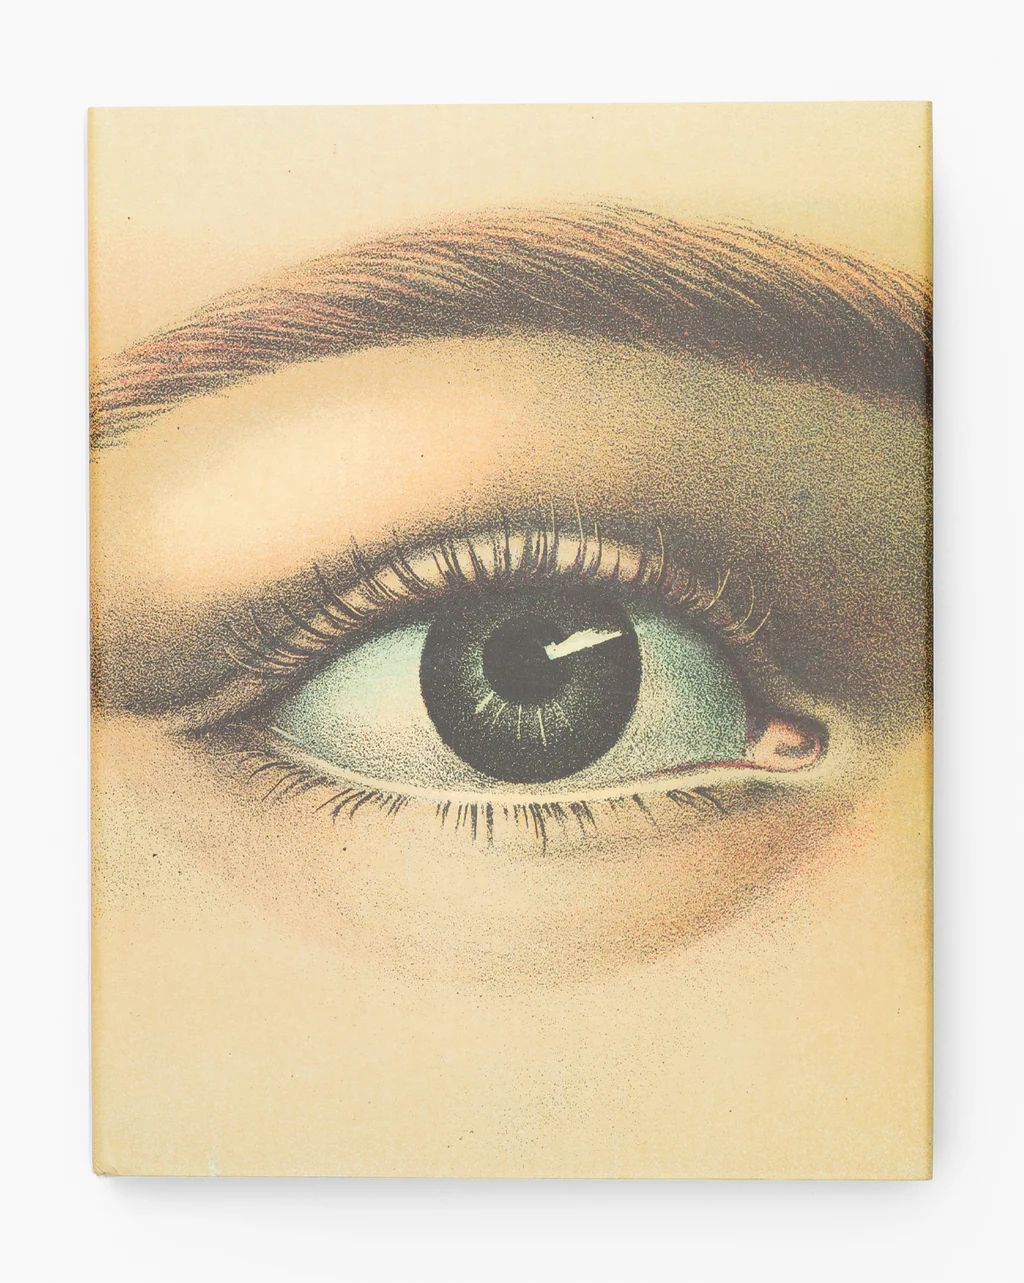 John Derian Picture Book | McGee & Co.